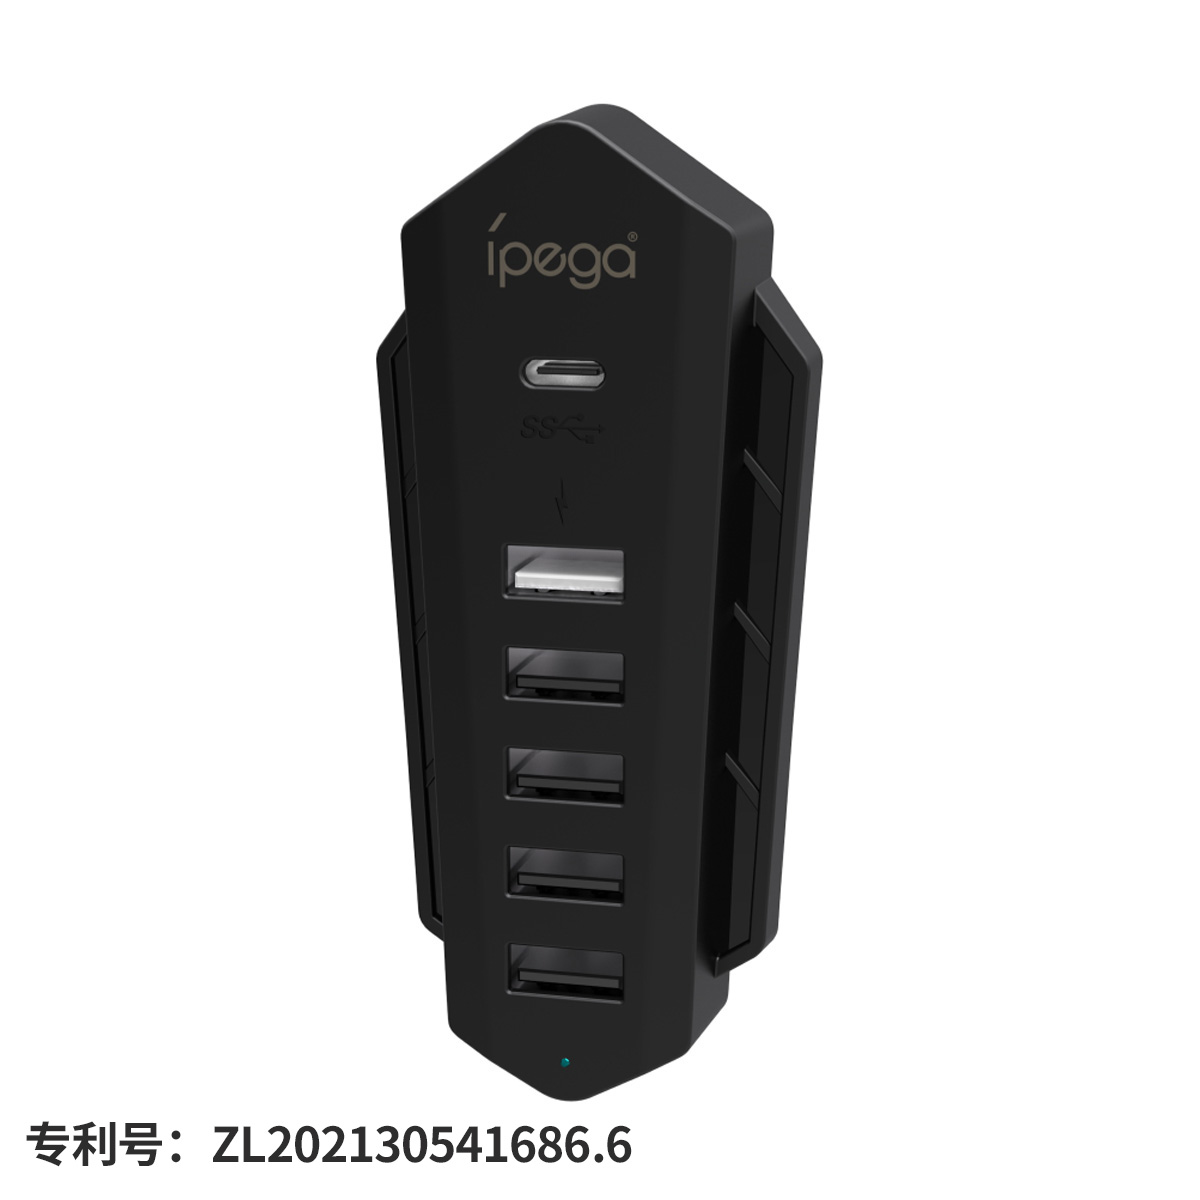 Ipega-P5036 P5 HUB six-in-one extender